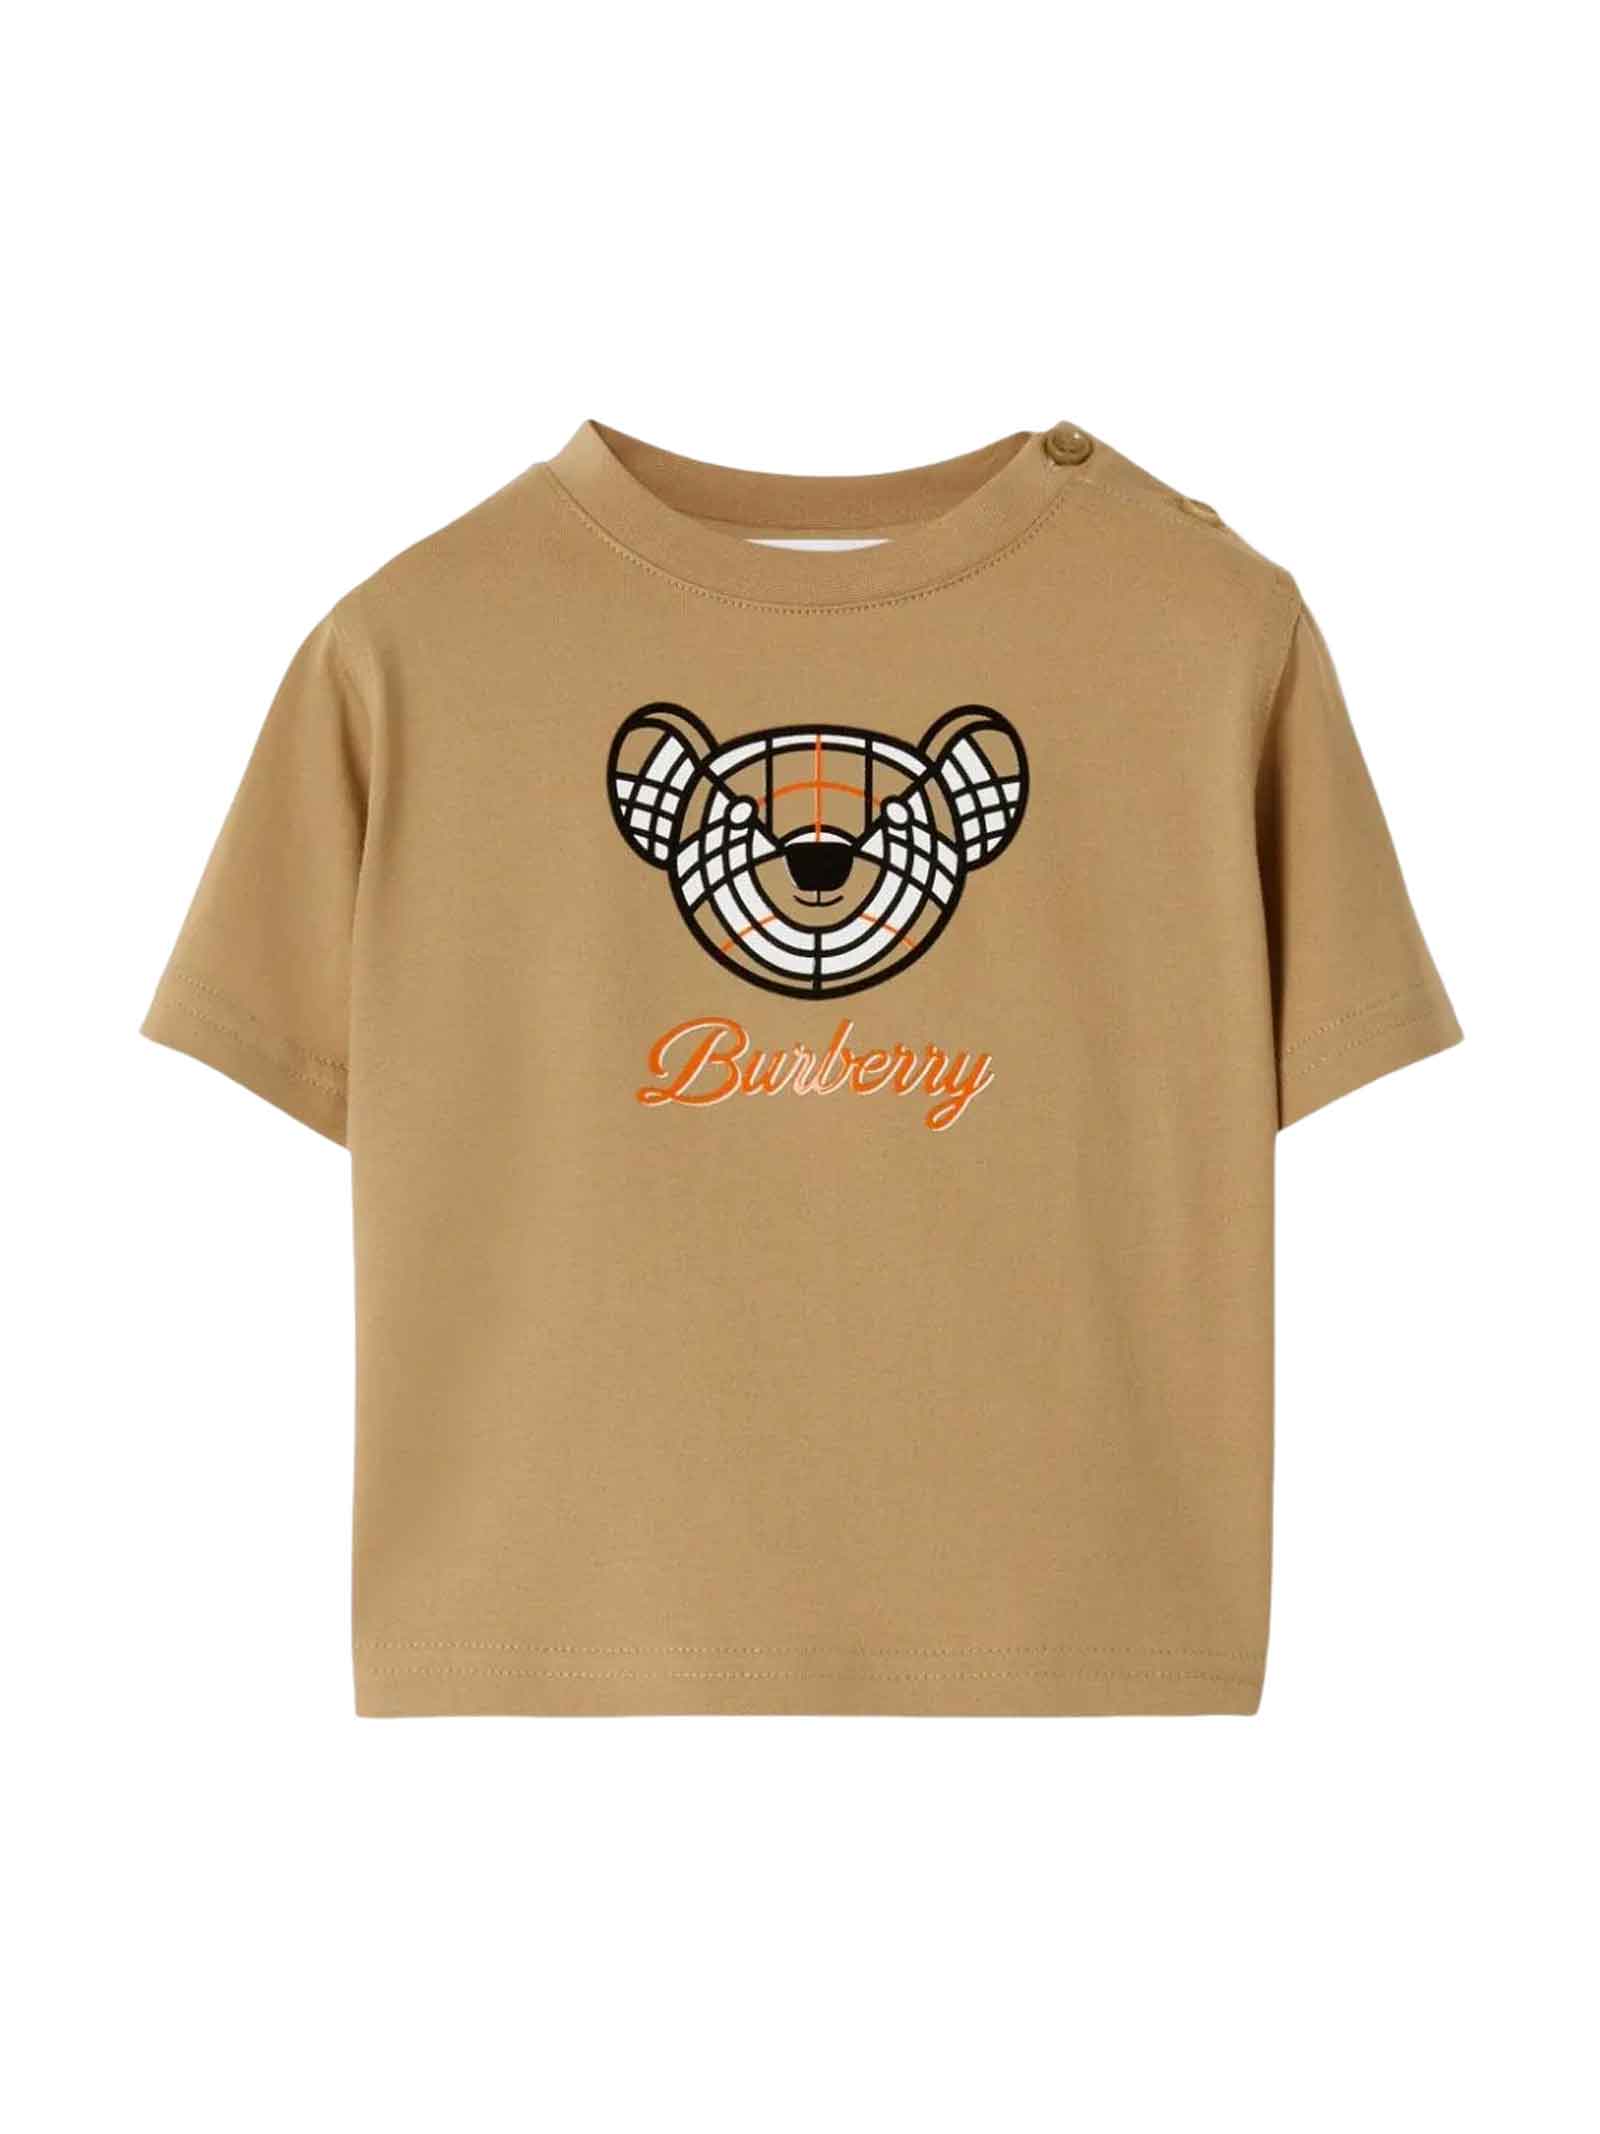 Shop Burberry Beige T-shirt Baby Girl